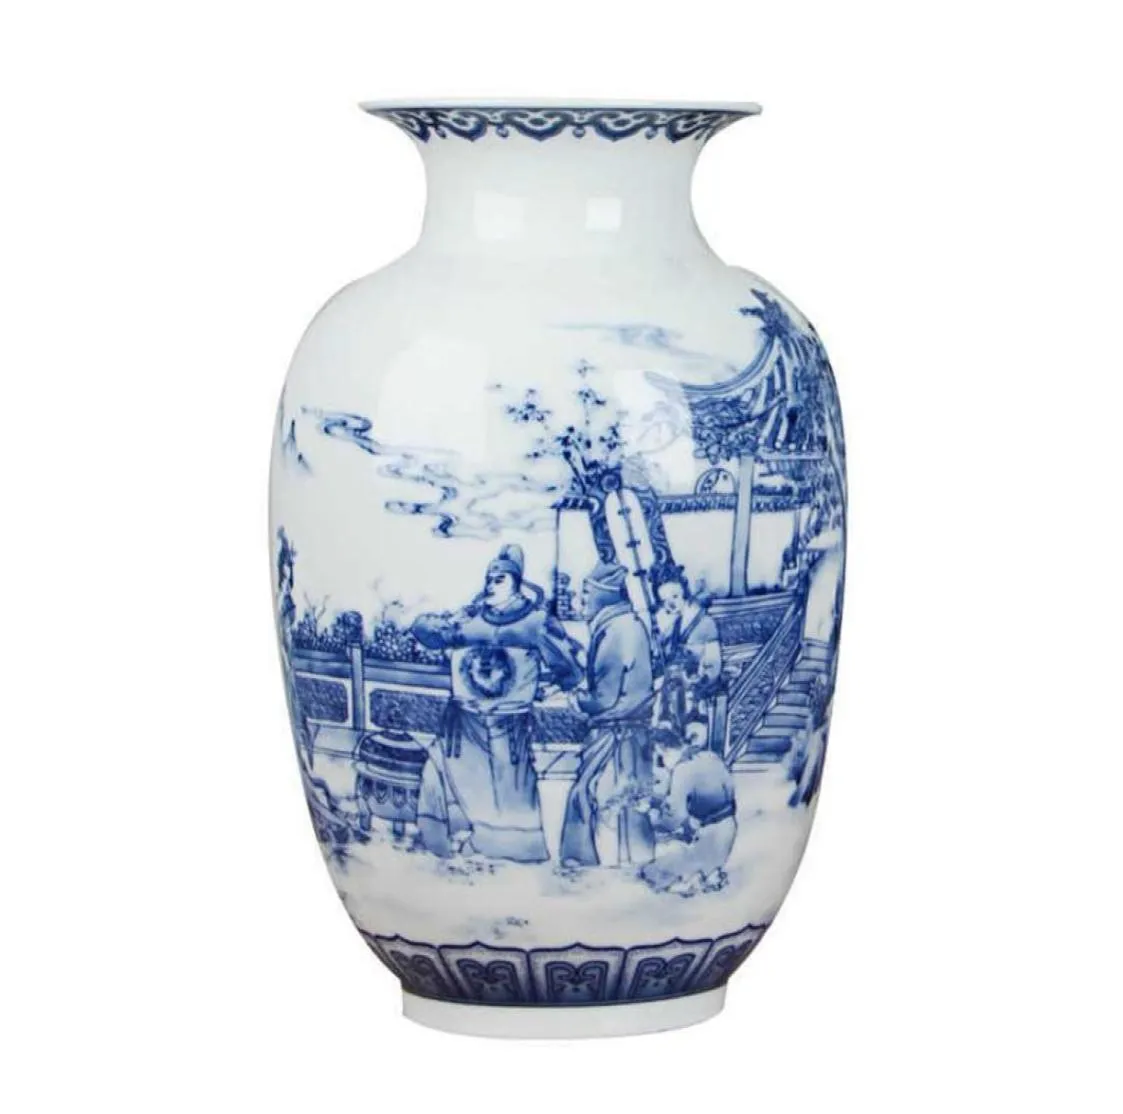 Classic Chinese Blue and White Ceramic Vase Antique Tabletop Porcelain Flower Vase For el Dining Room Decoration 210623232U6259954